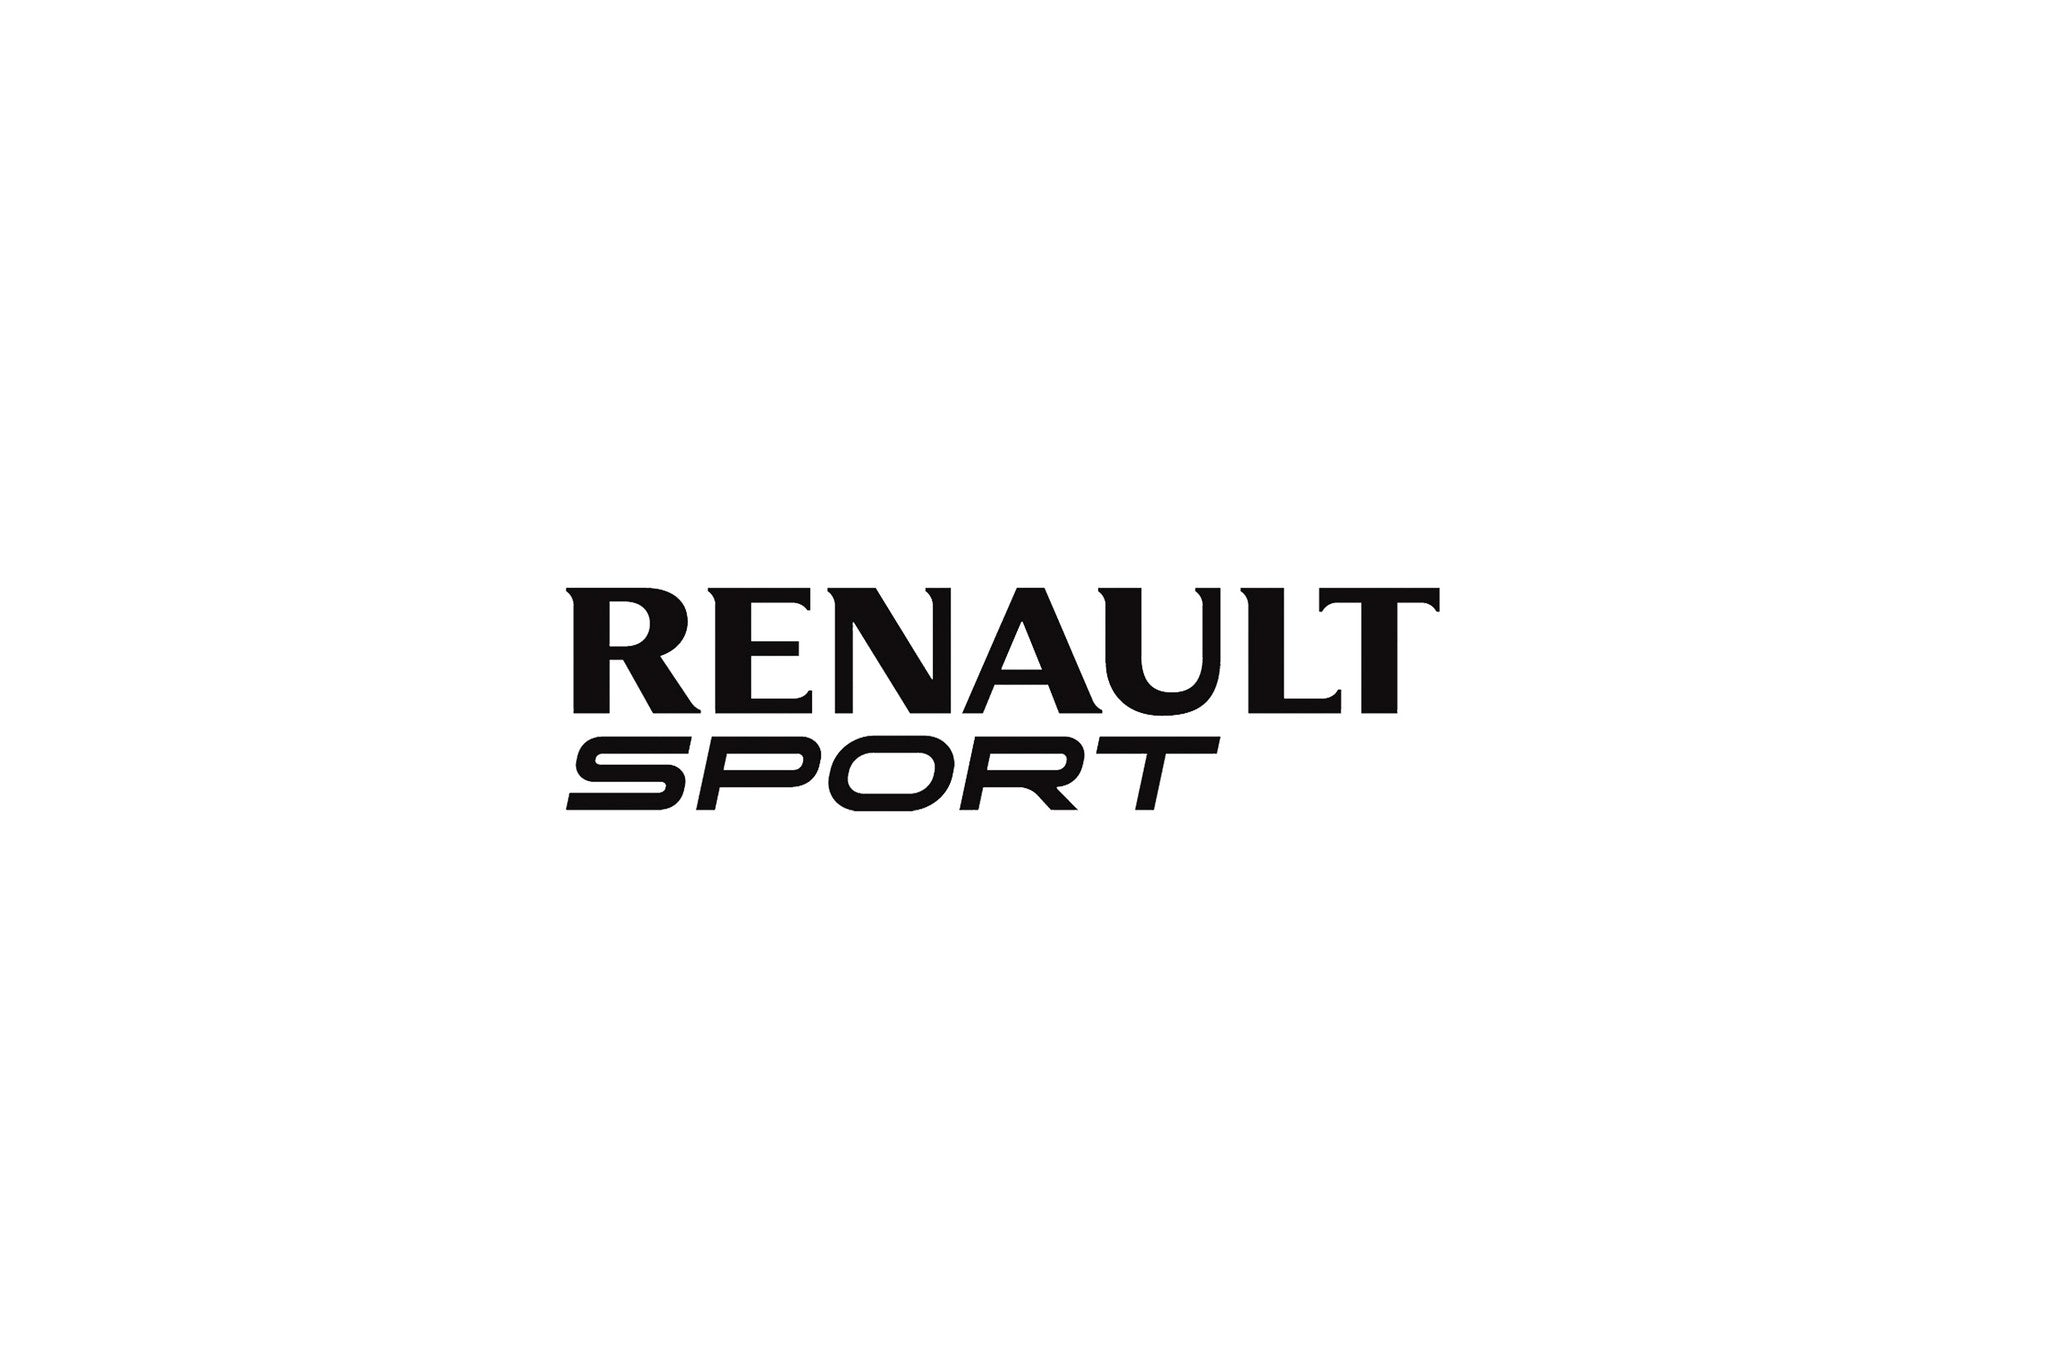 Renault Megane Sport R26 / 225 Side Curtain Airbags